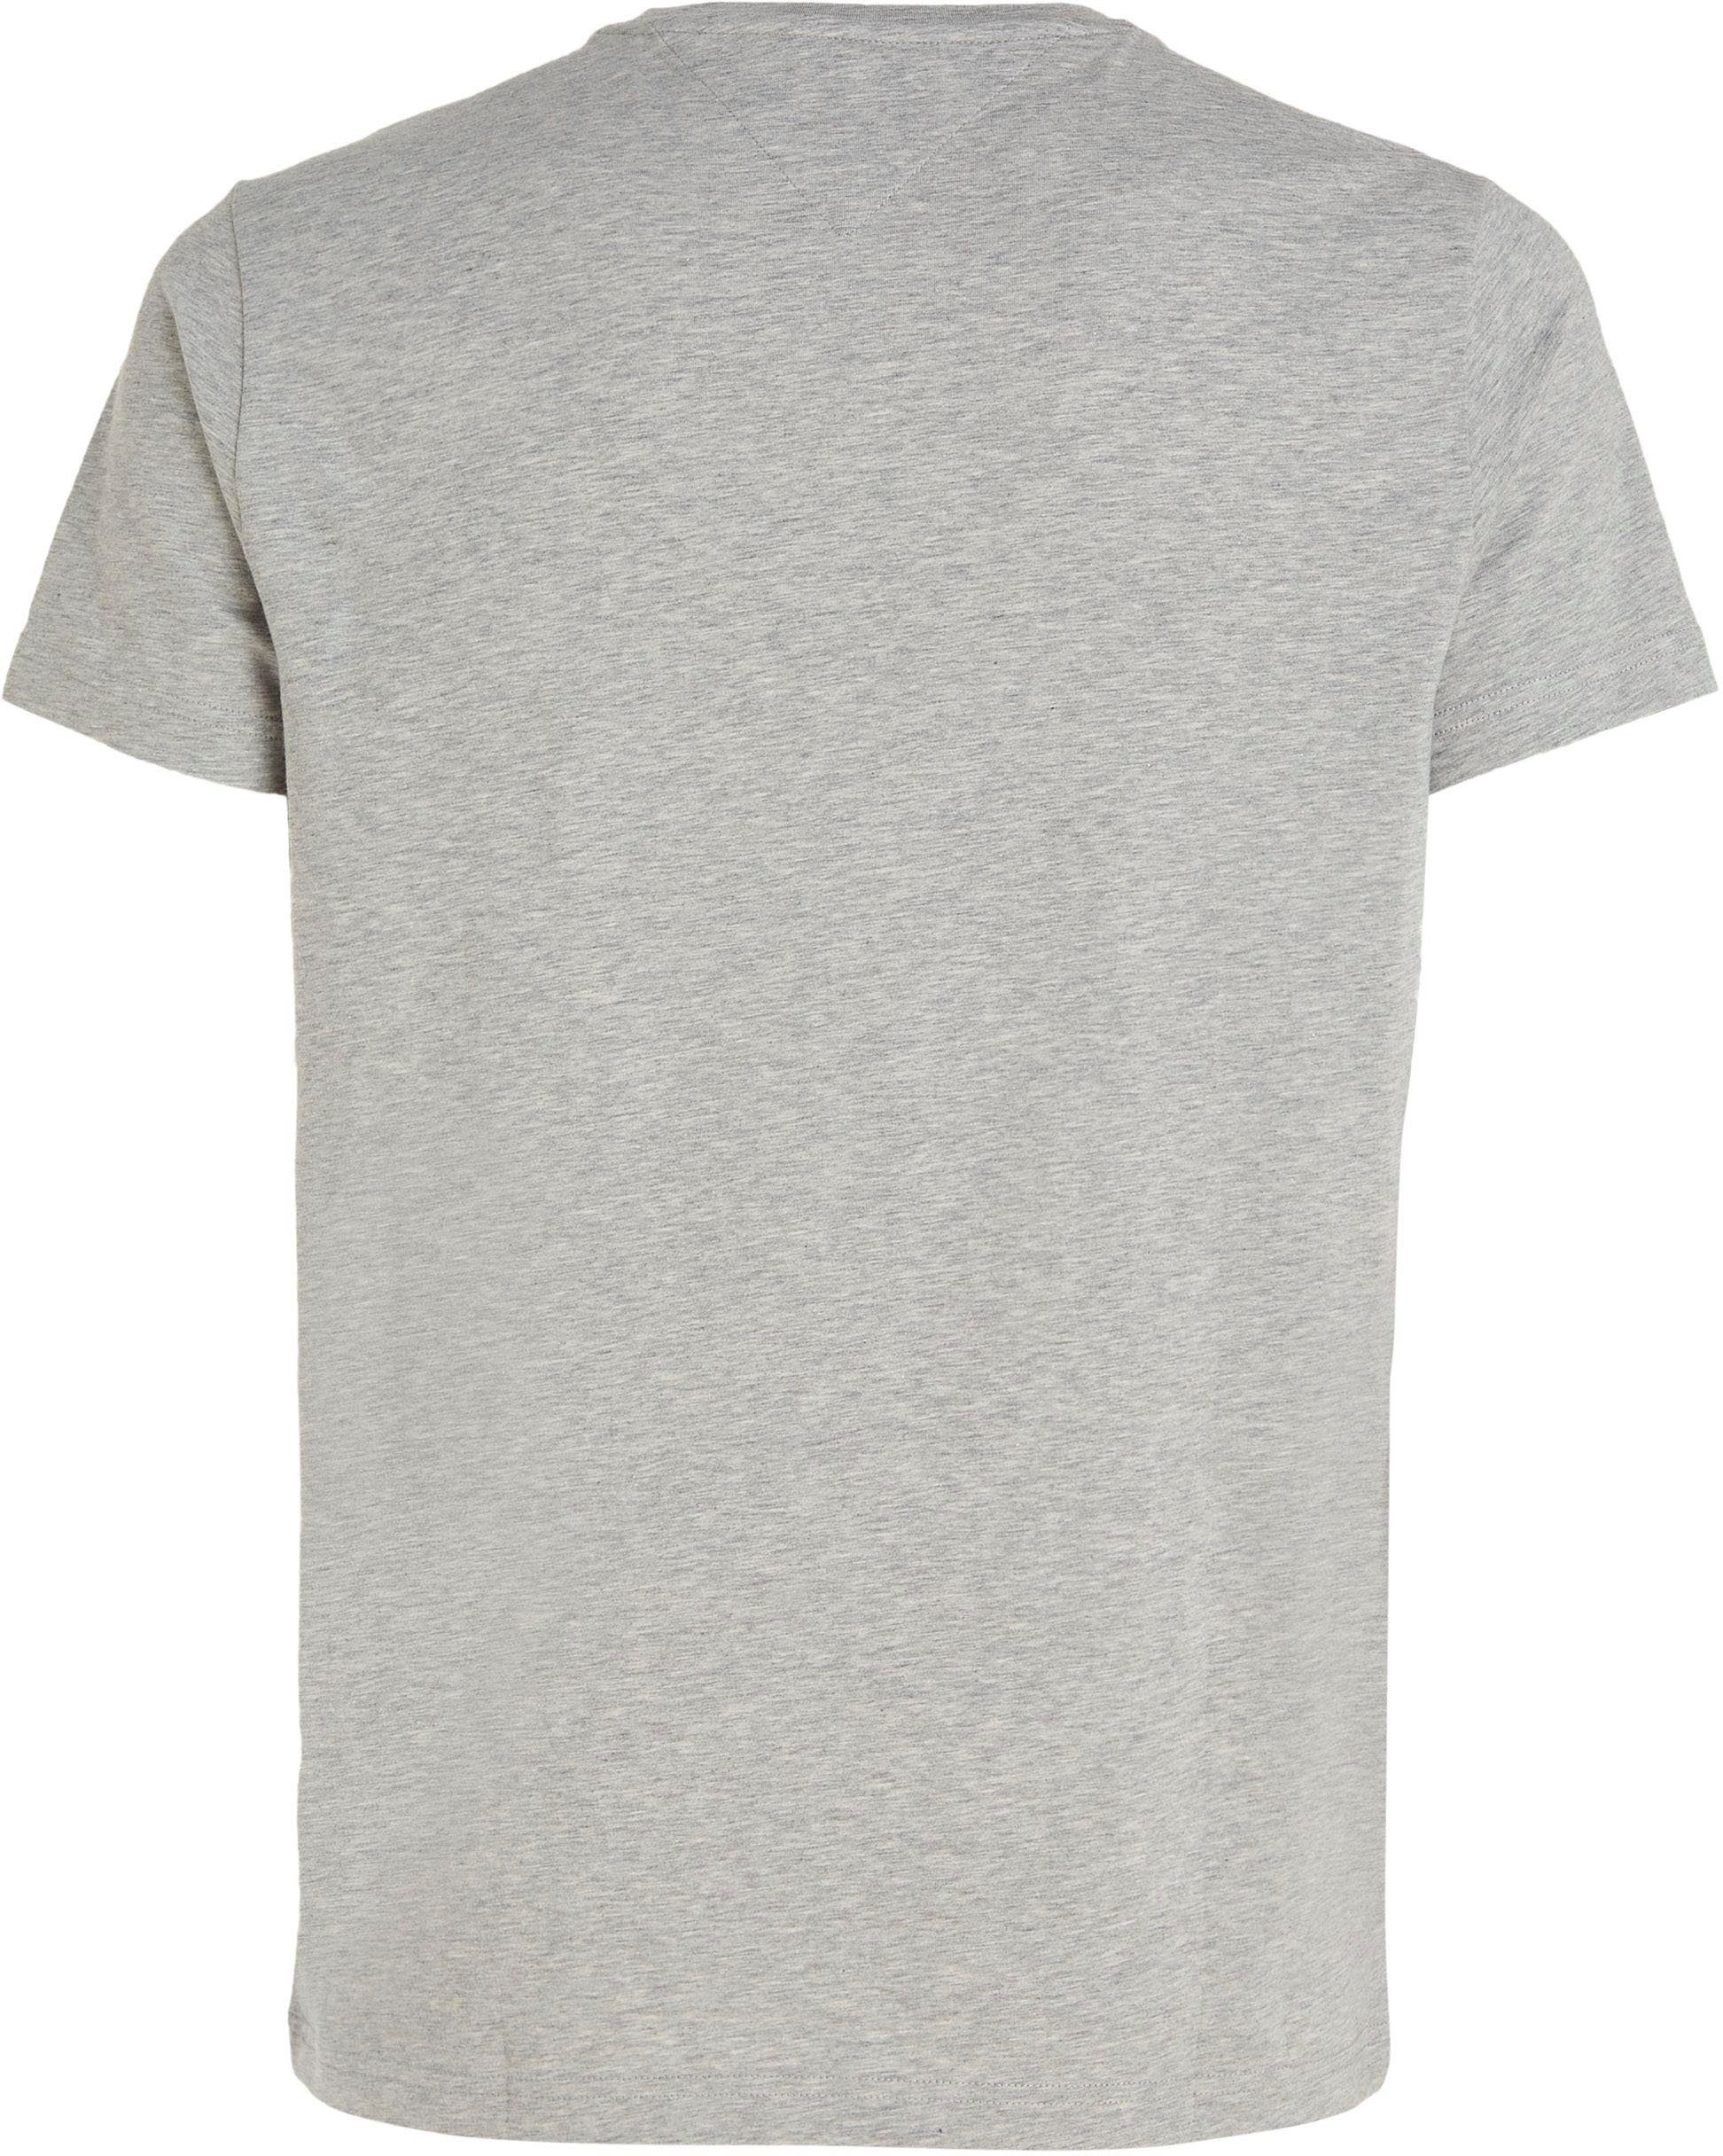 Hilfiger melange grey T-Shirt Tommy RH Stretch T-Shirt Slim